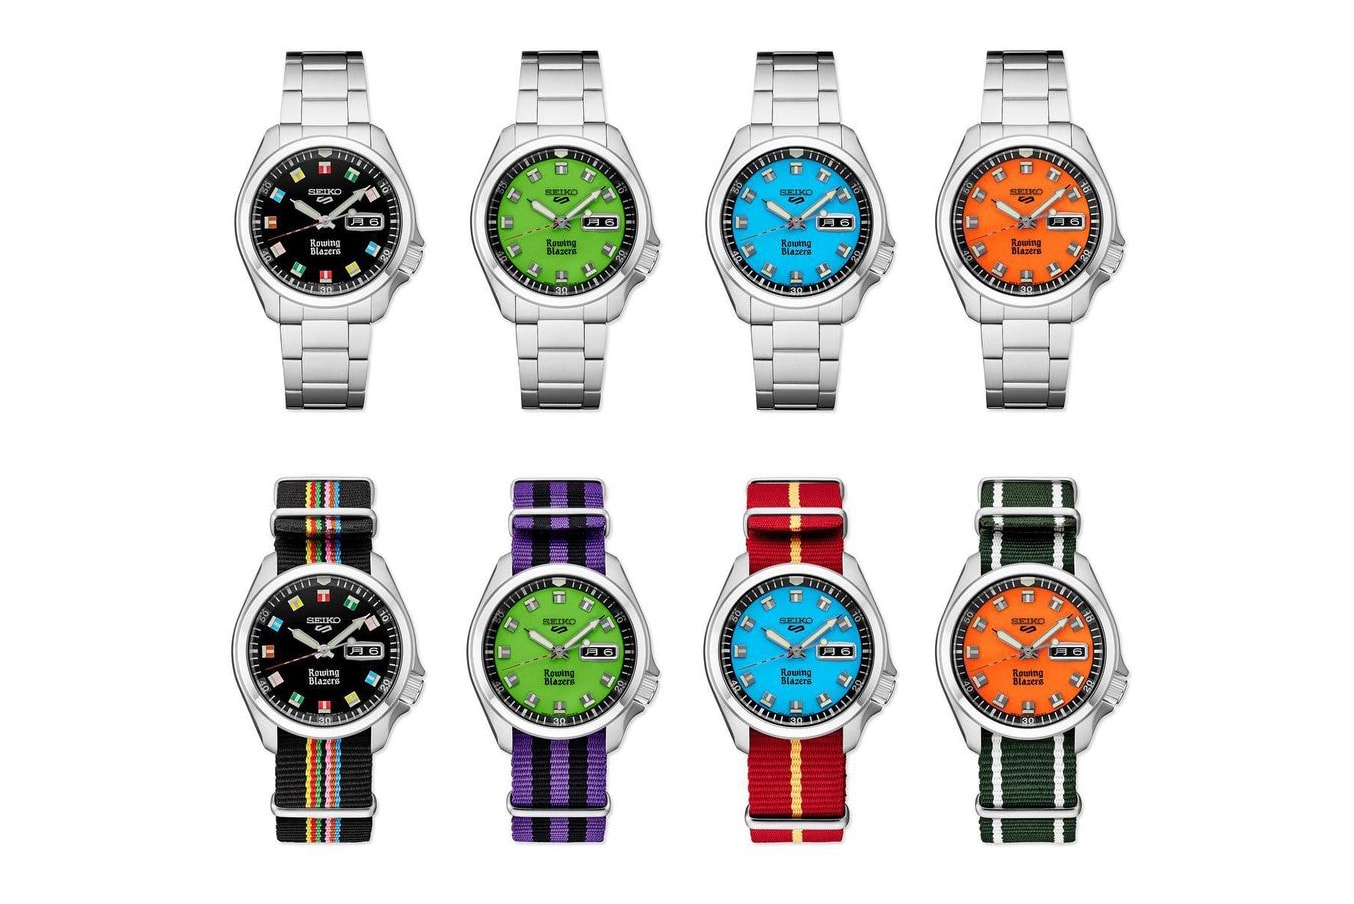 New Seiko 5 Sports 'Flieger' Watches - First Class Watches Blog